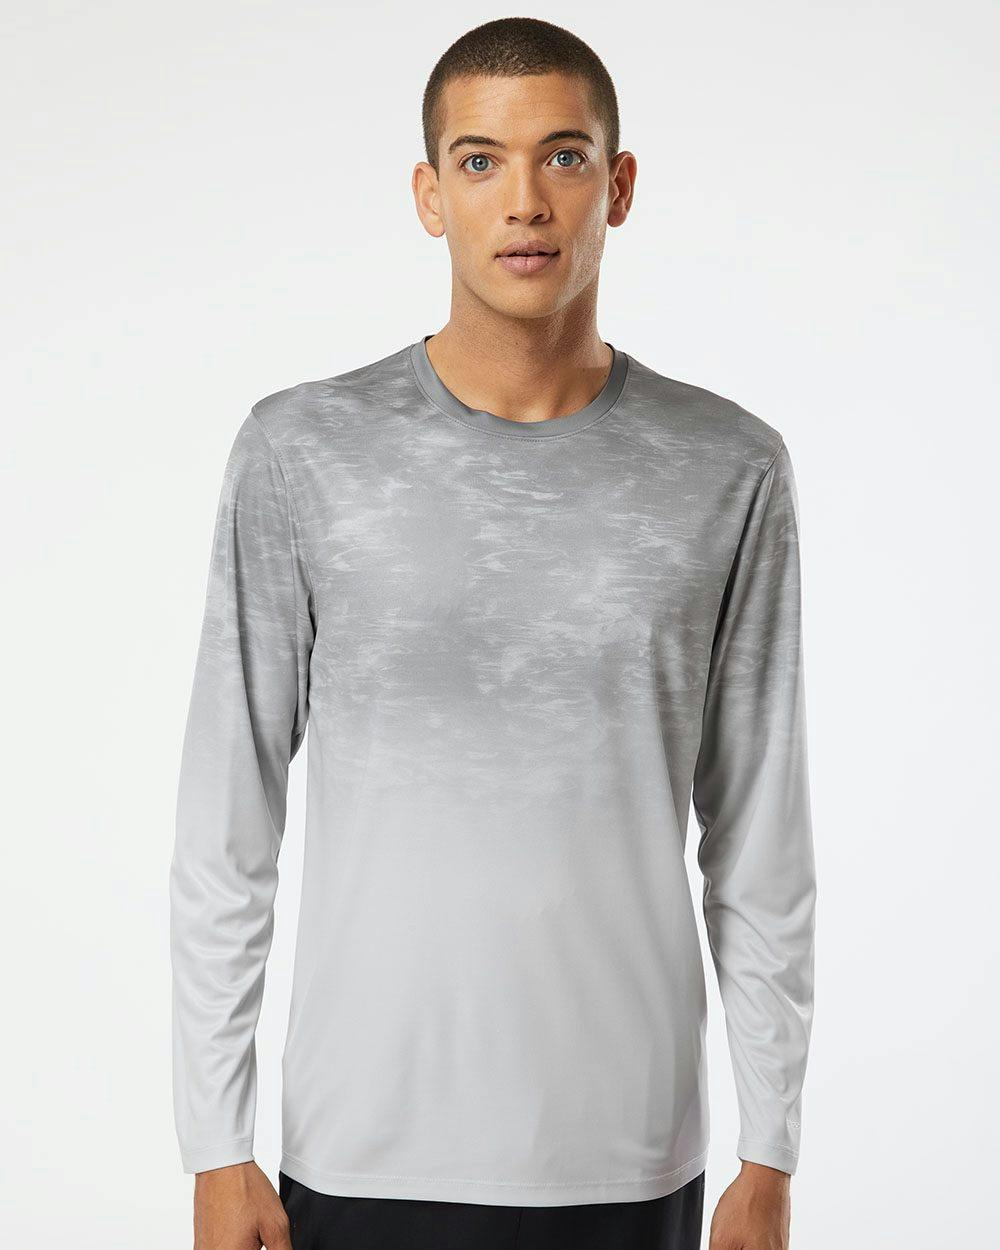 Image for Montauk Oceanic Fade Performance Long Sleeve T-Shirt - 229